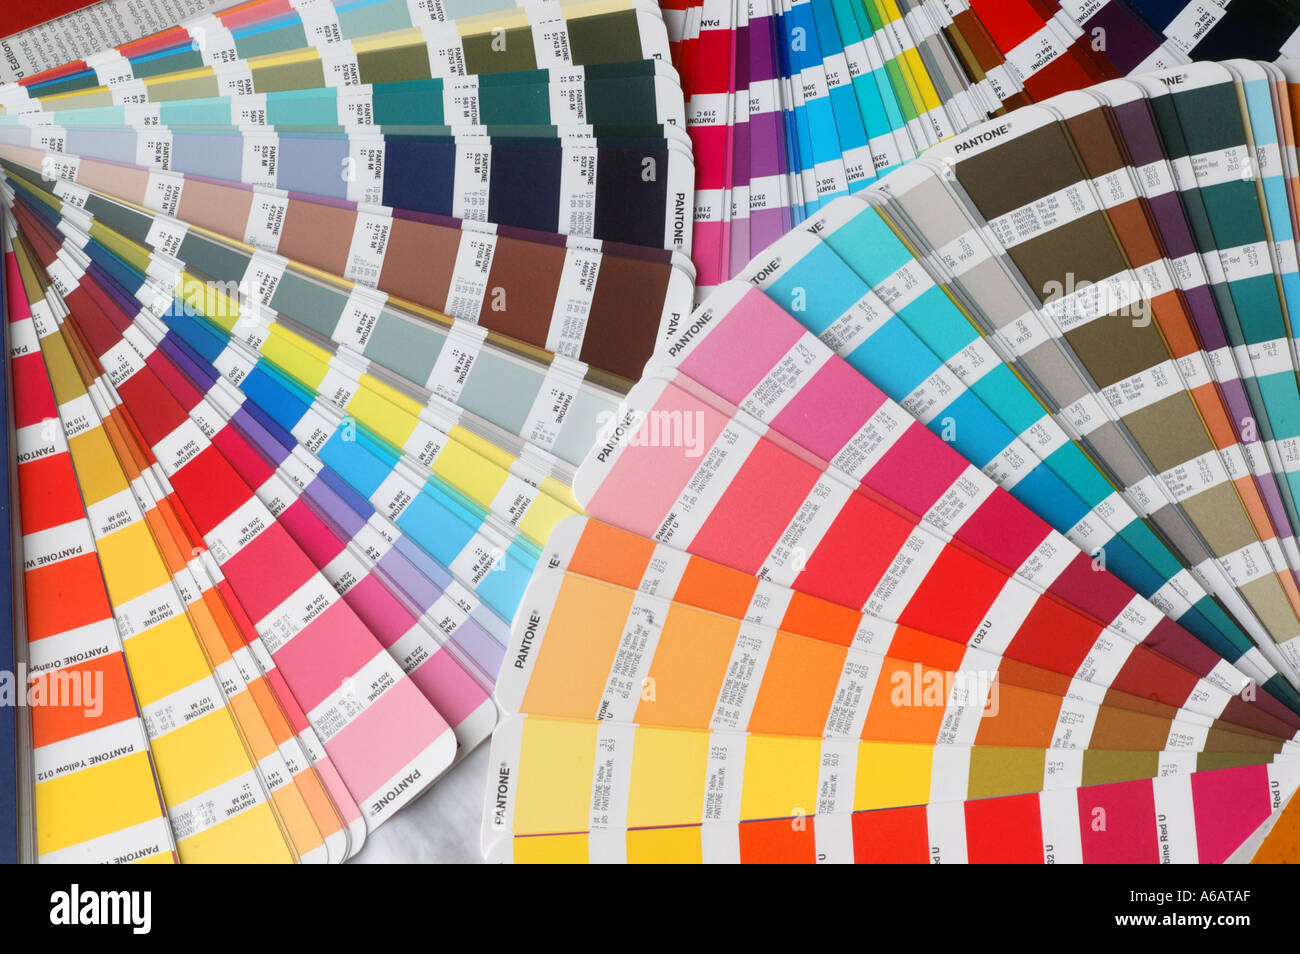 Pantone printing industry standard colour charts dsca 2135 Stock Photo